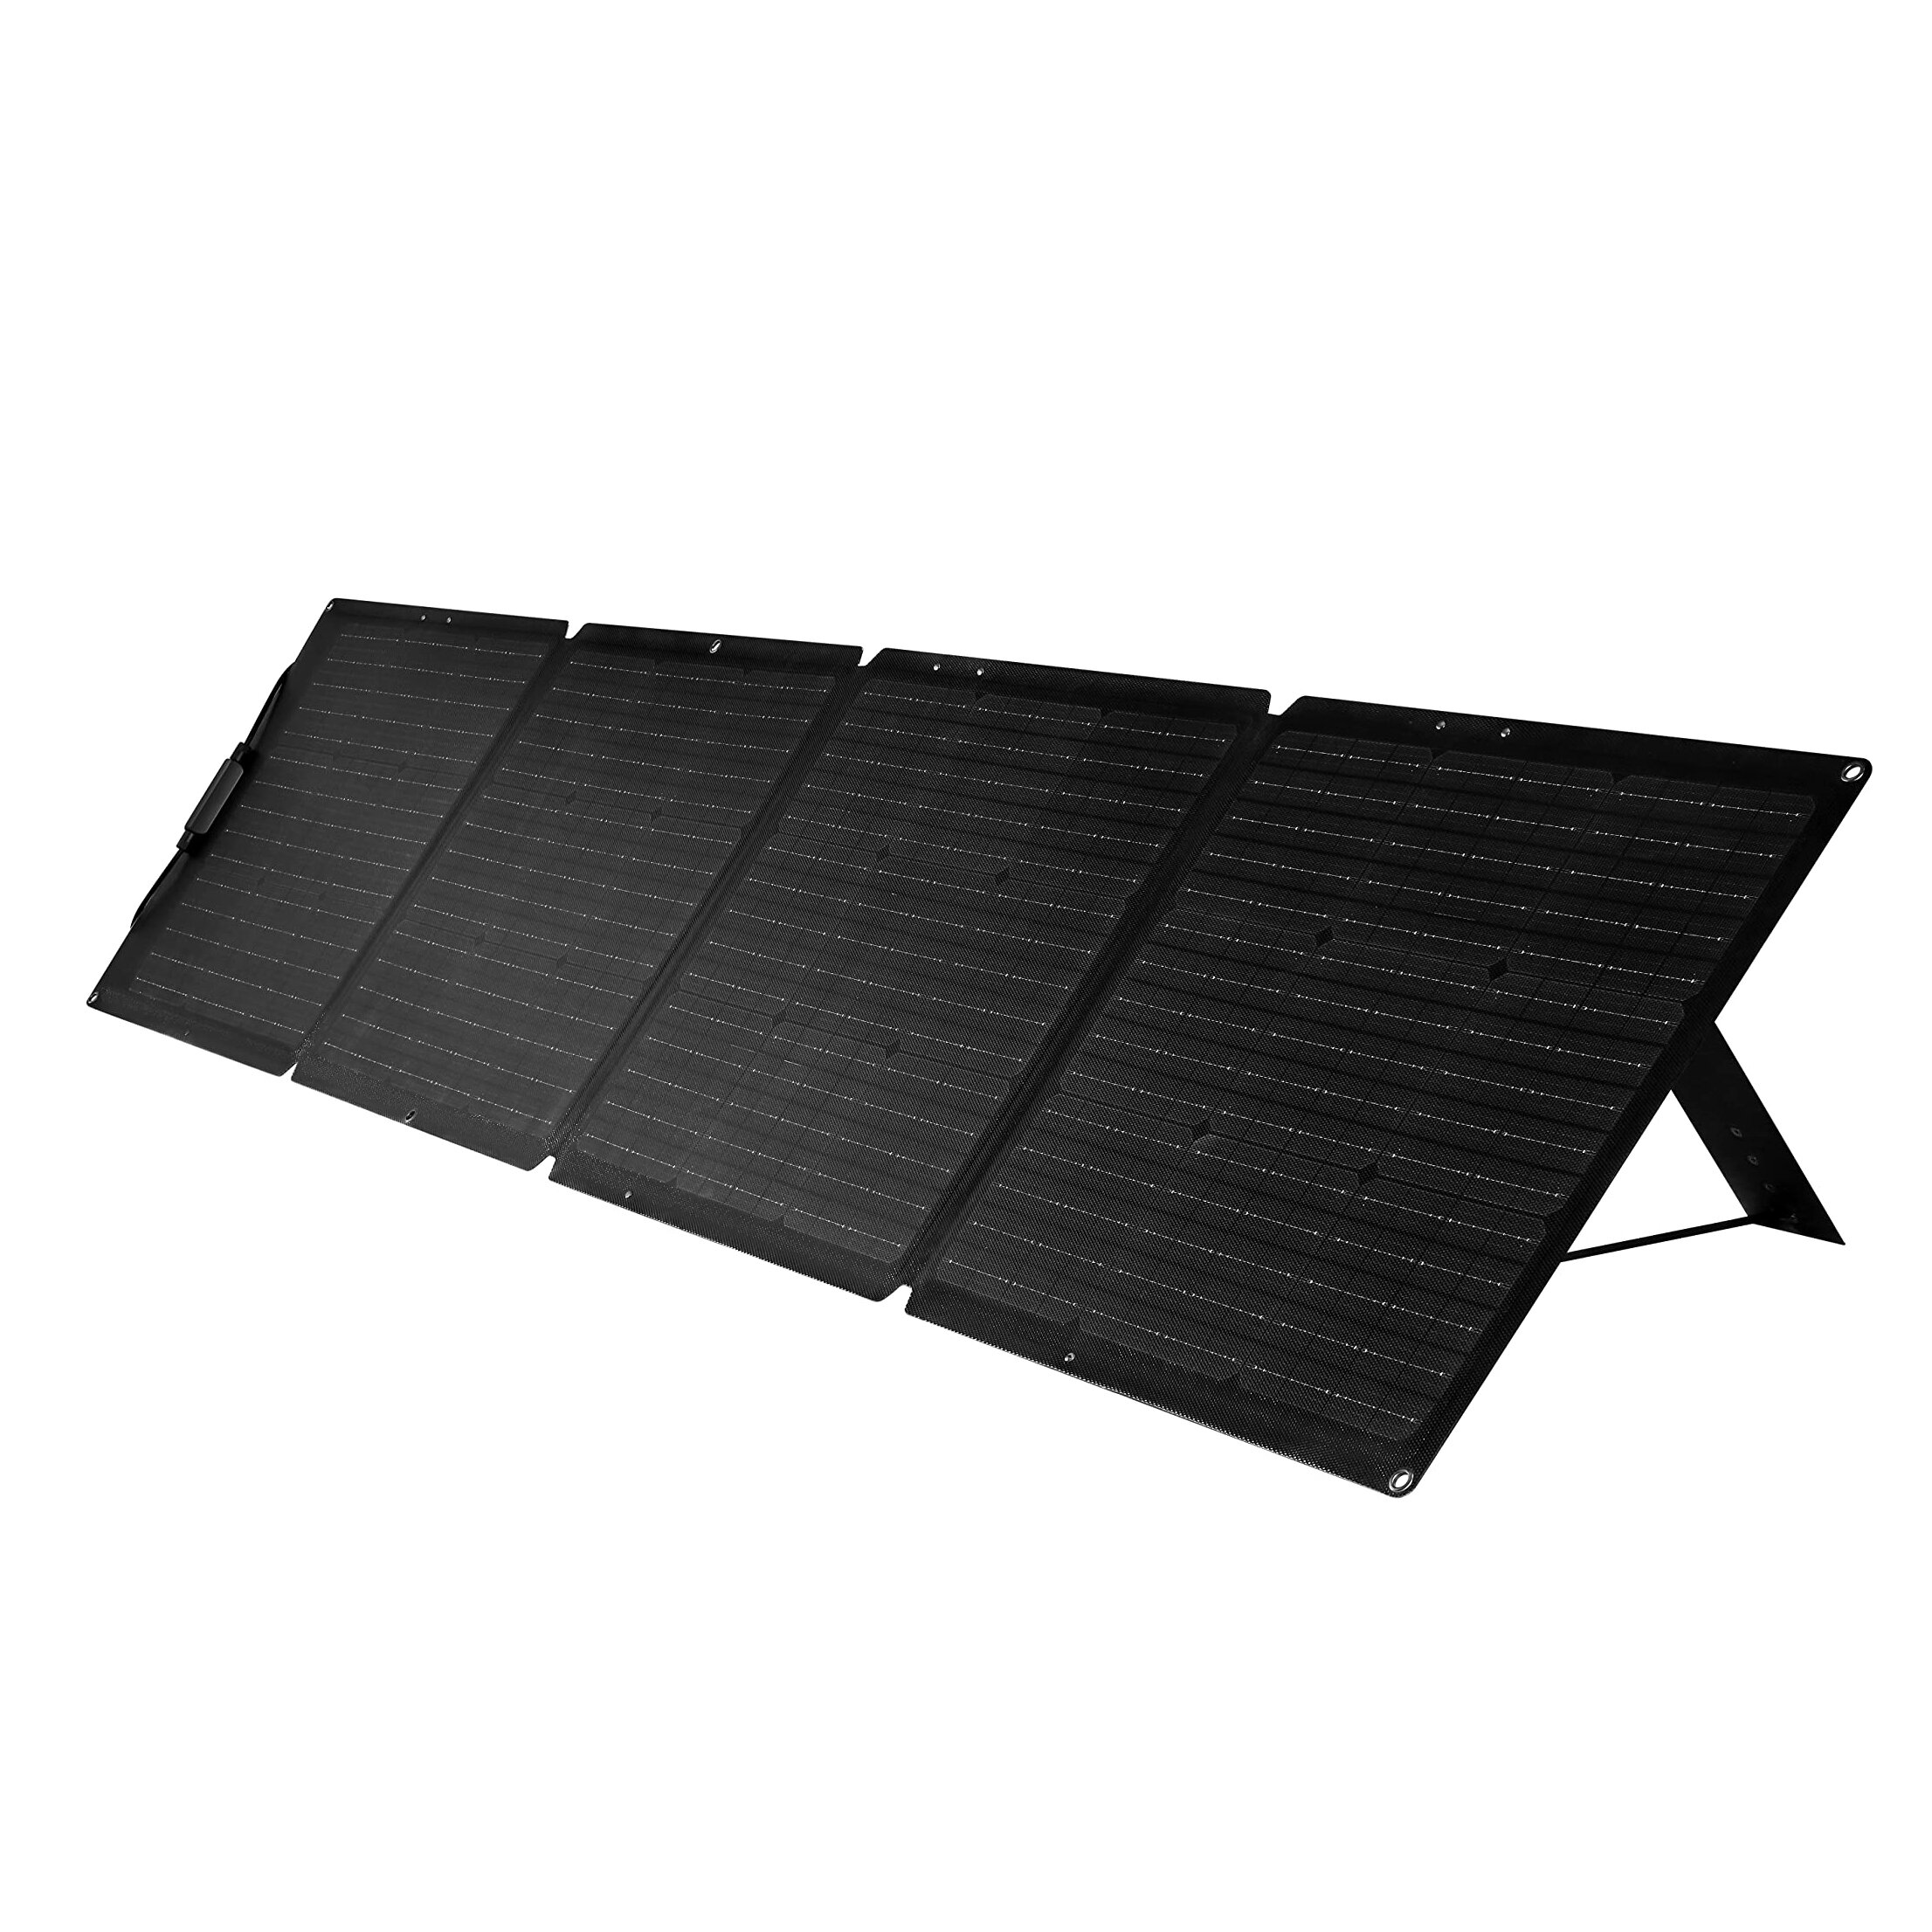 [EU Direct] Zendure 200W 太陽光パネル 折りたたみ式 軽量 高変換効率 防水IP67 パワーステーション/アウトドアアドベンチャー/キャンプに適している